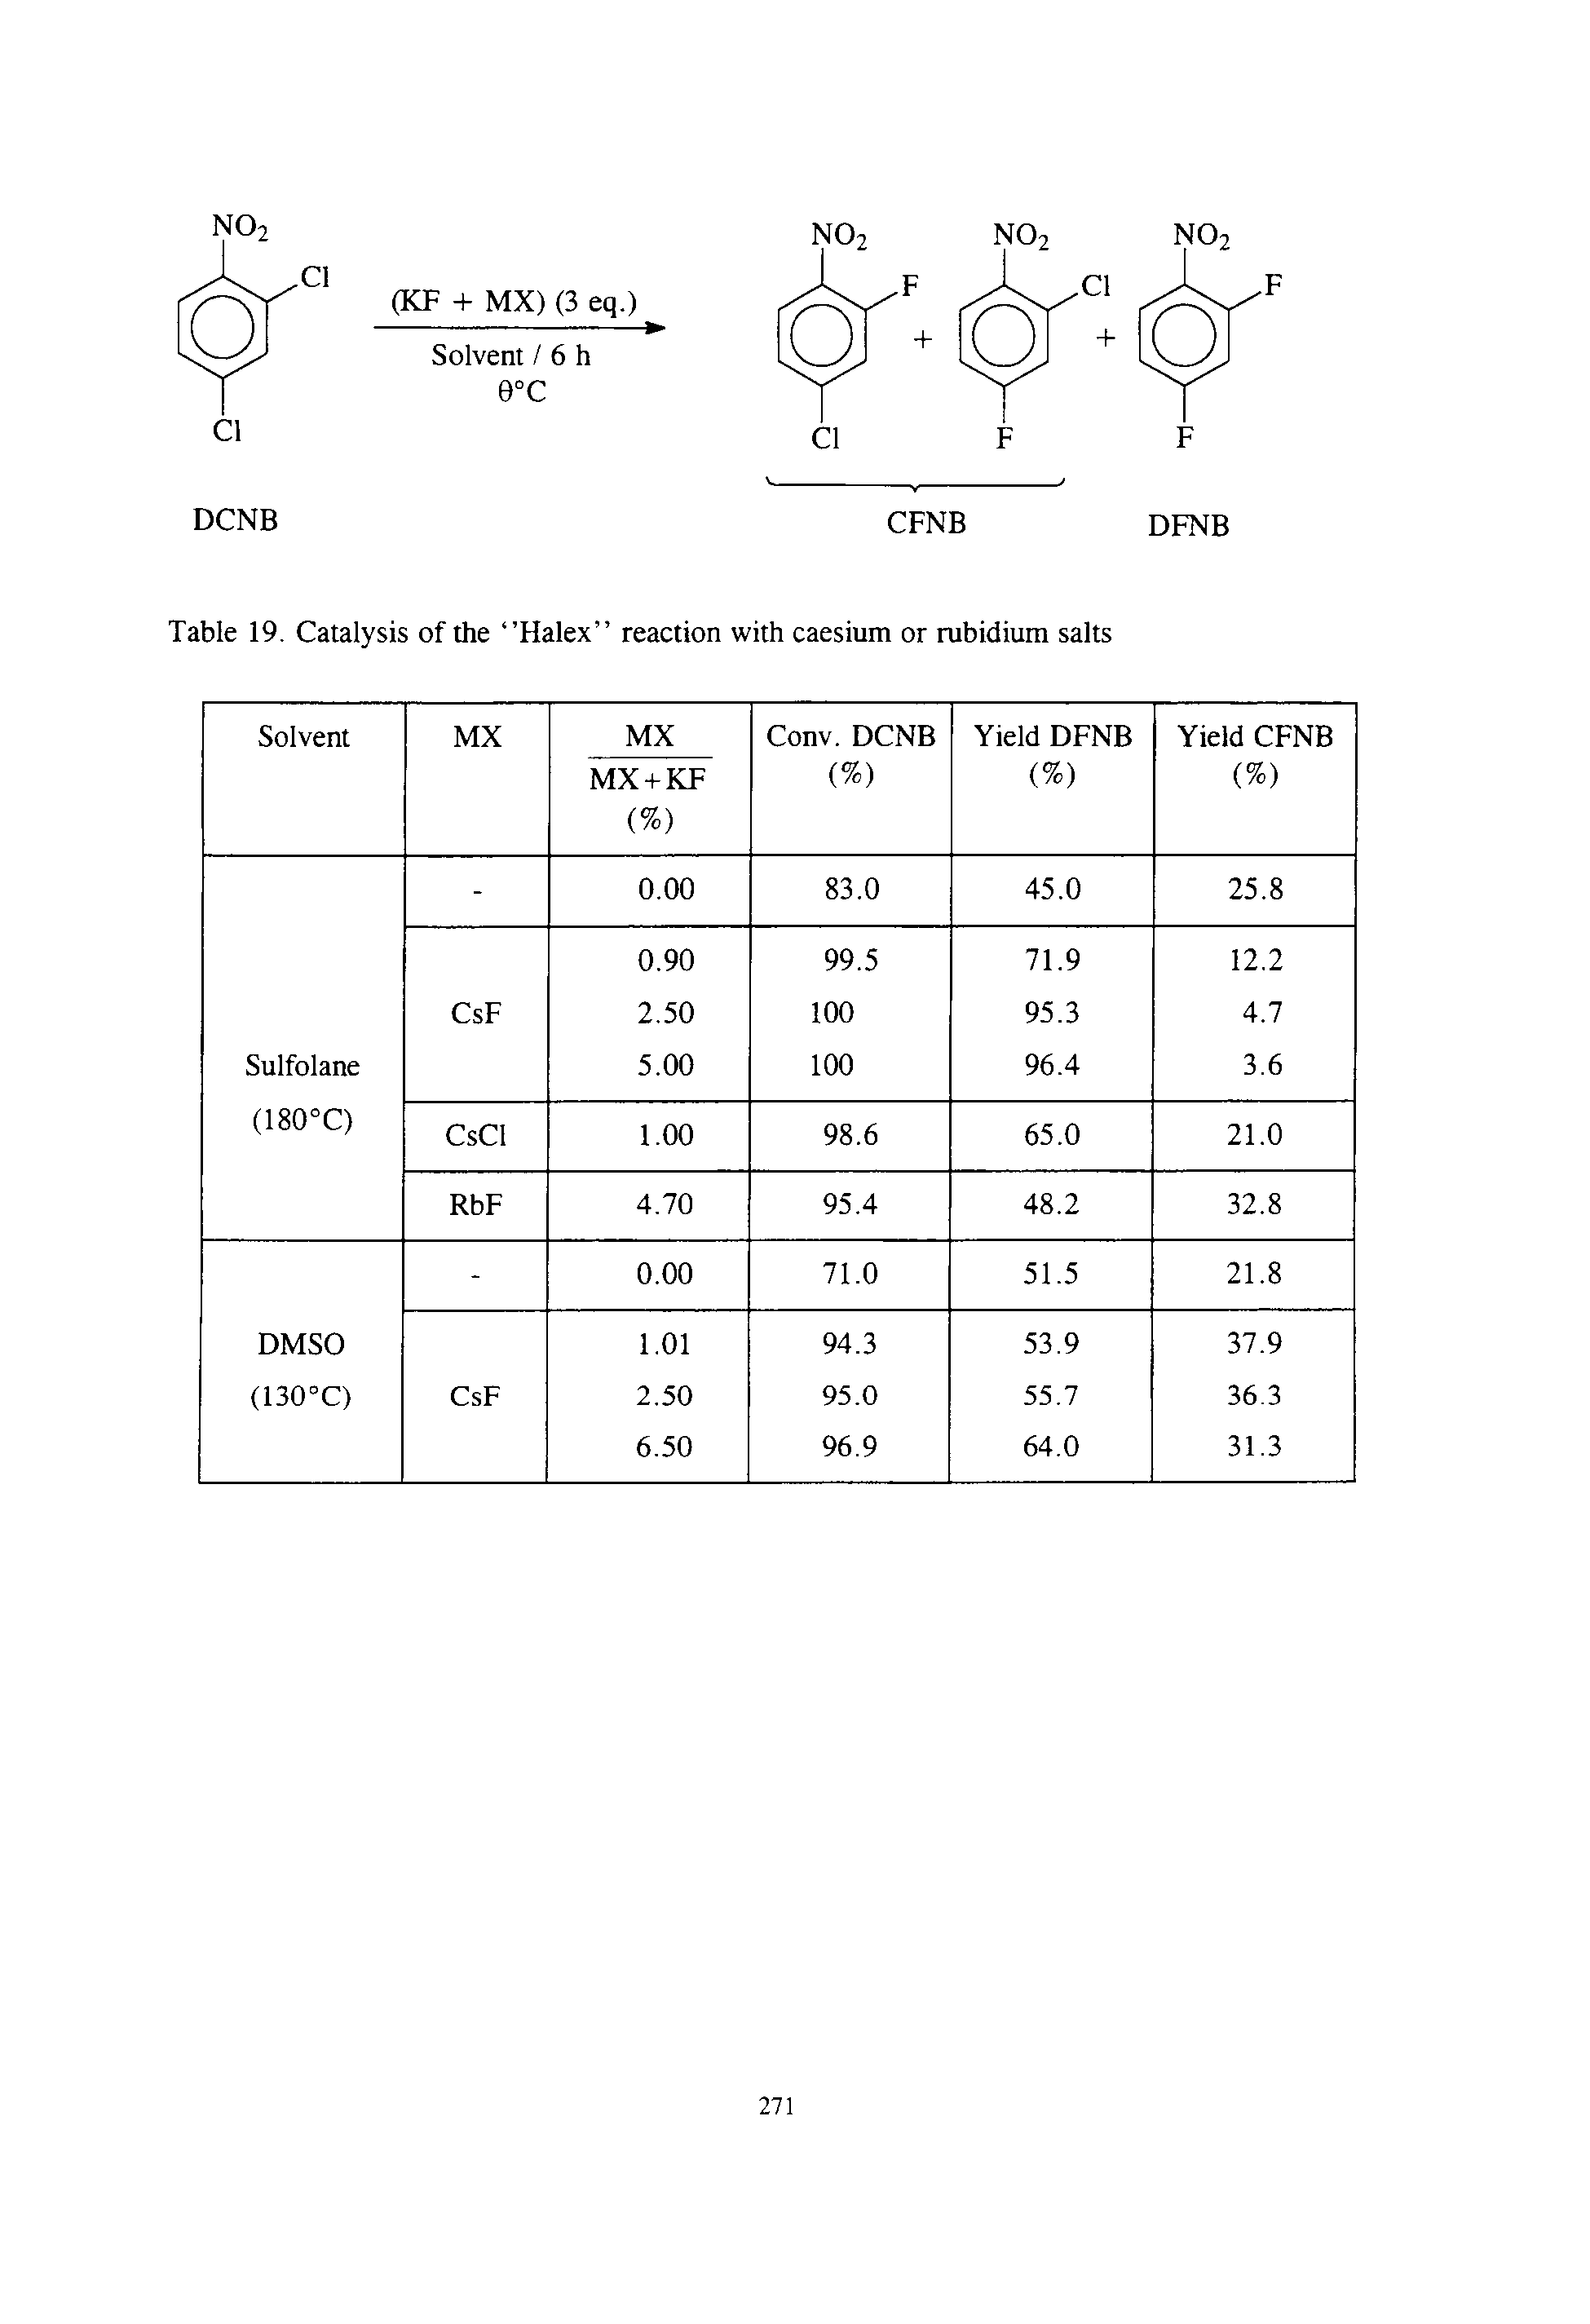 Table 19. Catalysis of the "Halex reaction with caesium or rubidium salts...